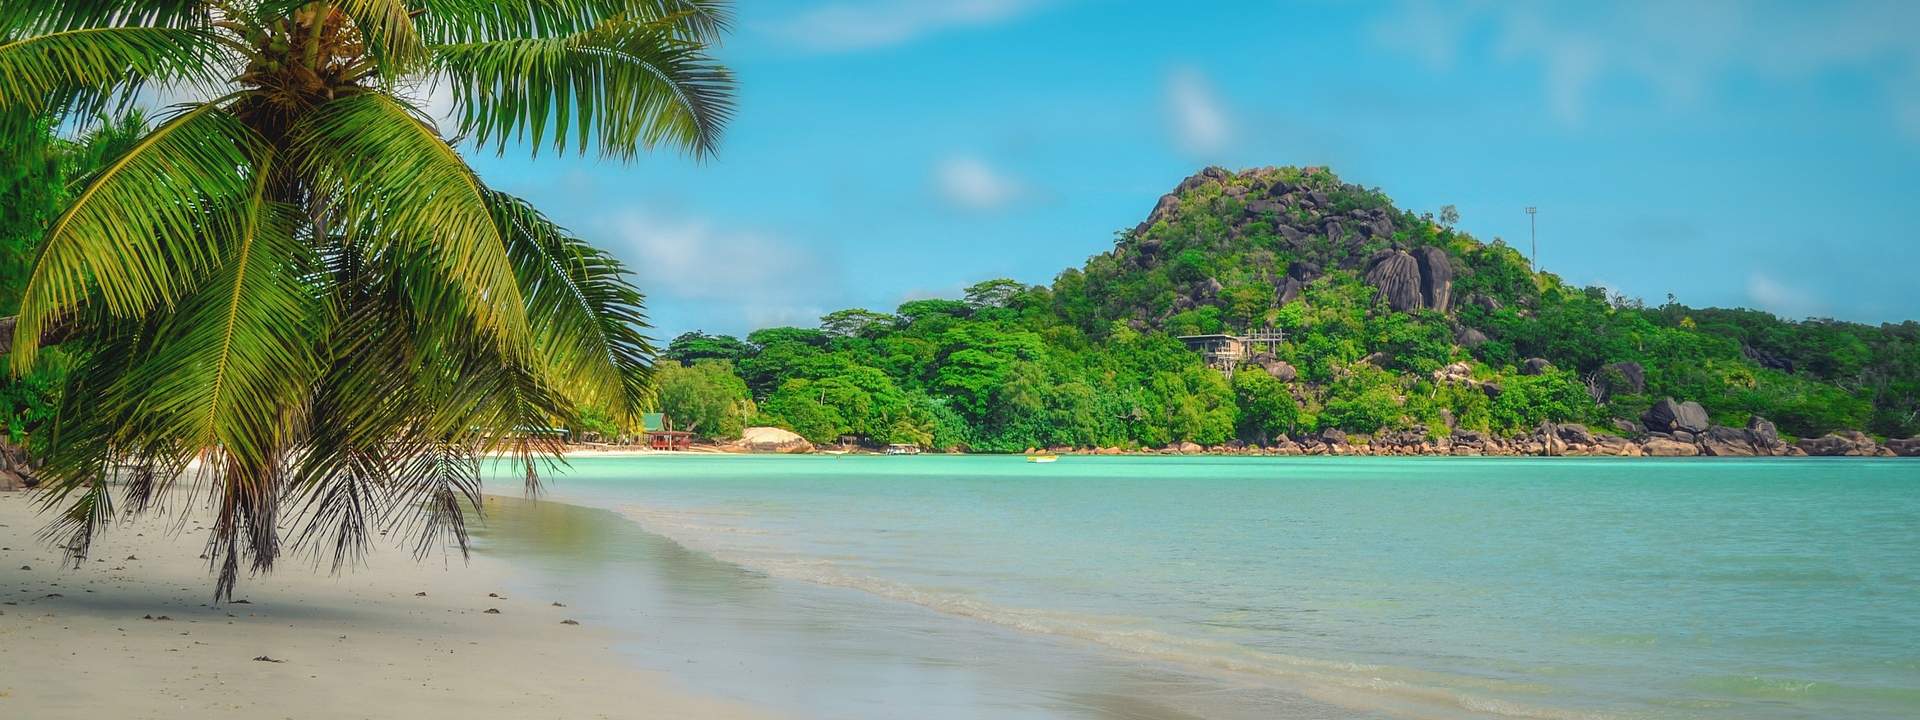 Cabin cruise around the three main islands of the Seychelles